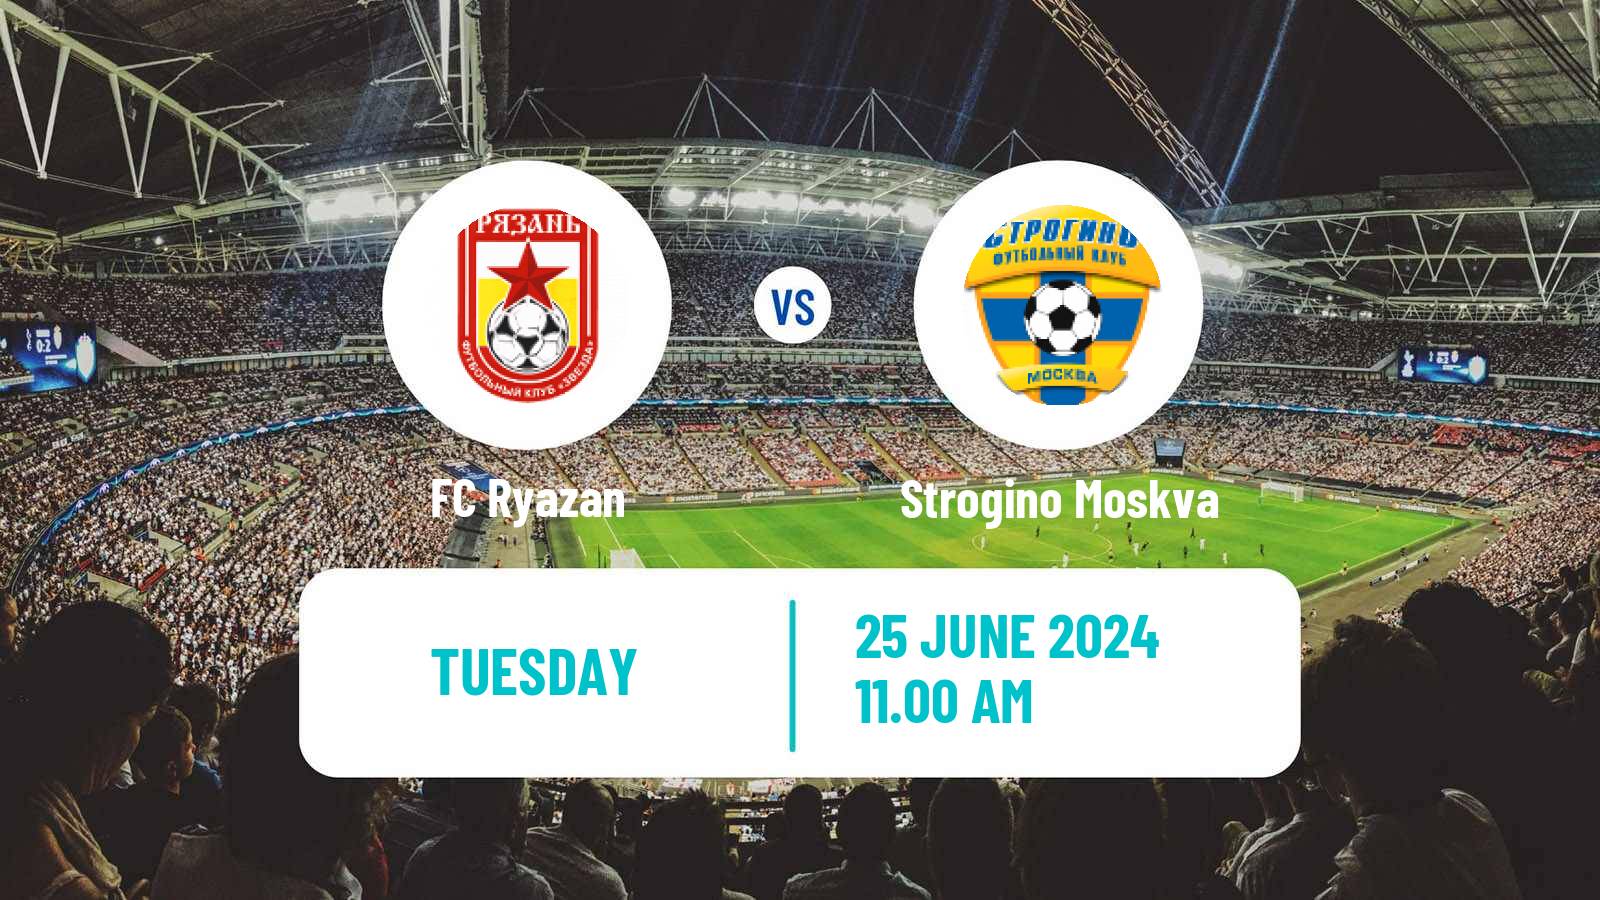 Soccer FNL 2 Division B Group 3 Ryazan - Strogino Moskva